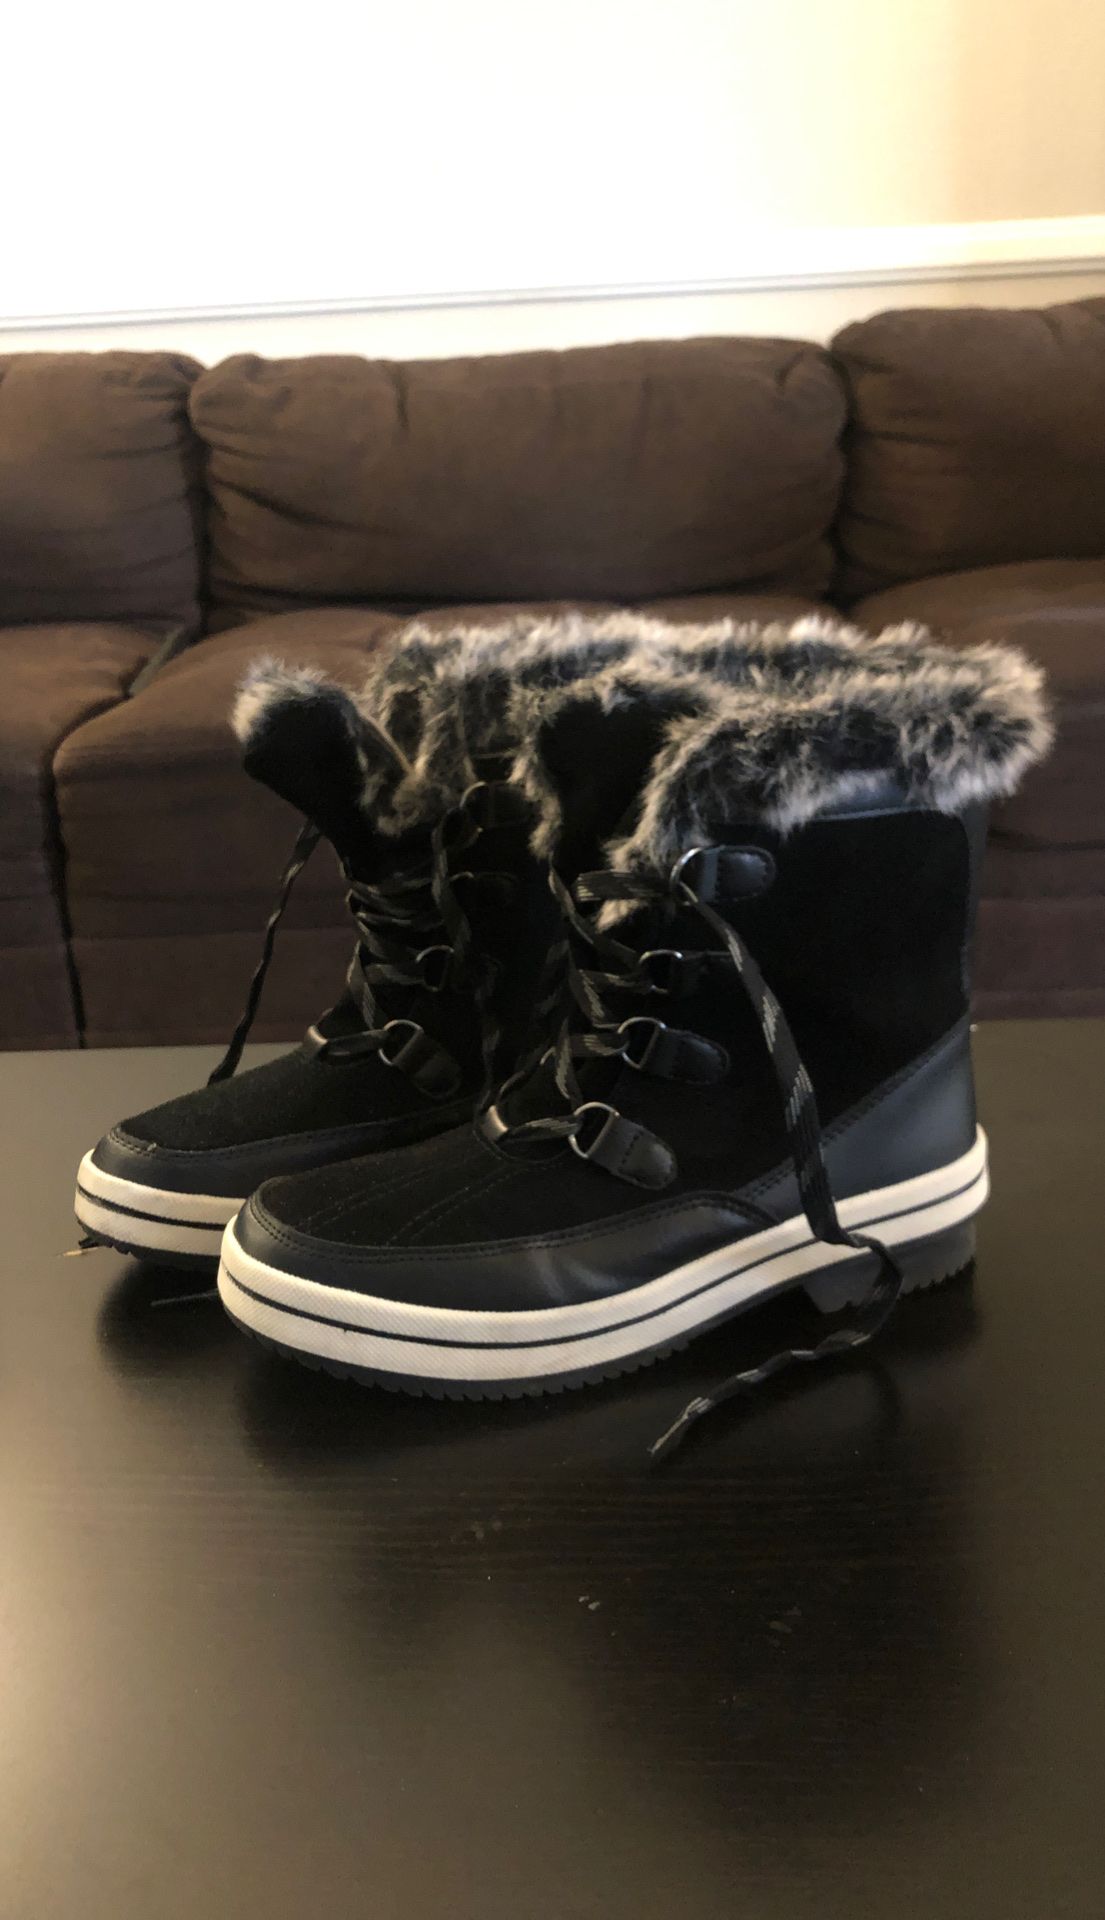 Women’s snow/rain boots size 9